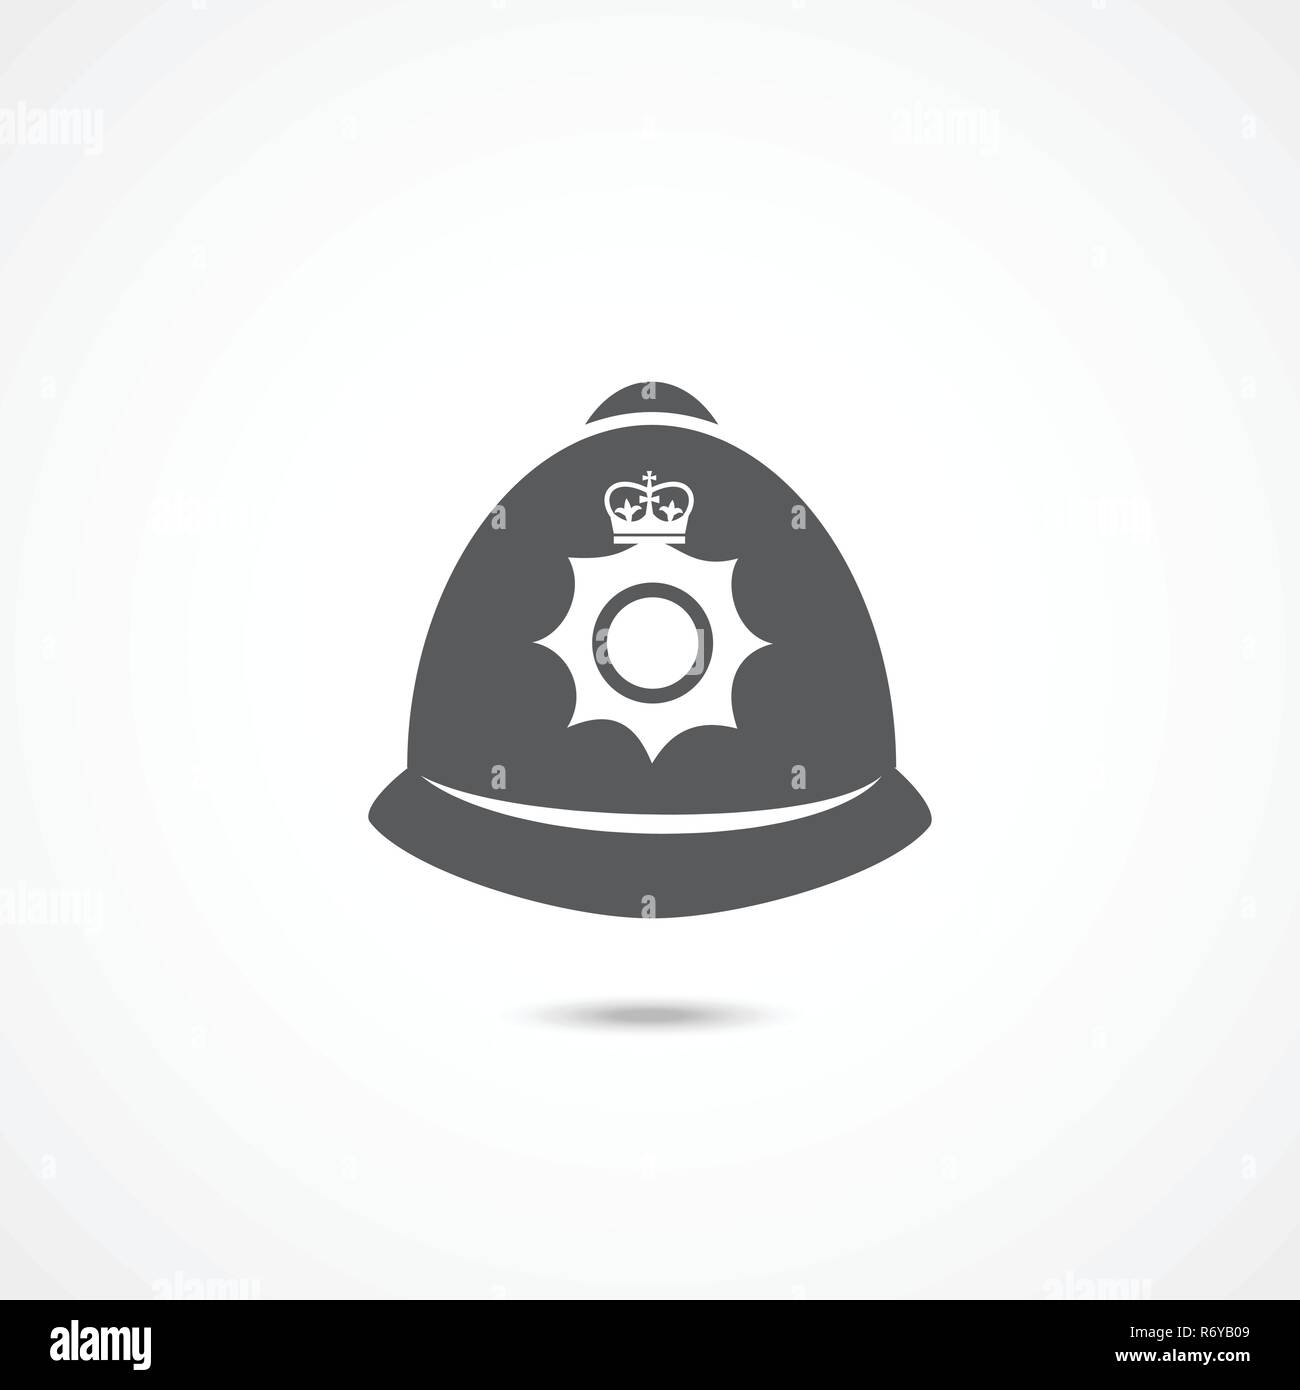 London police hat icon Stock Vector